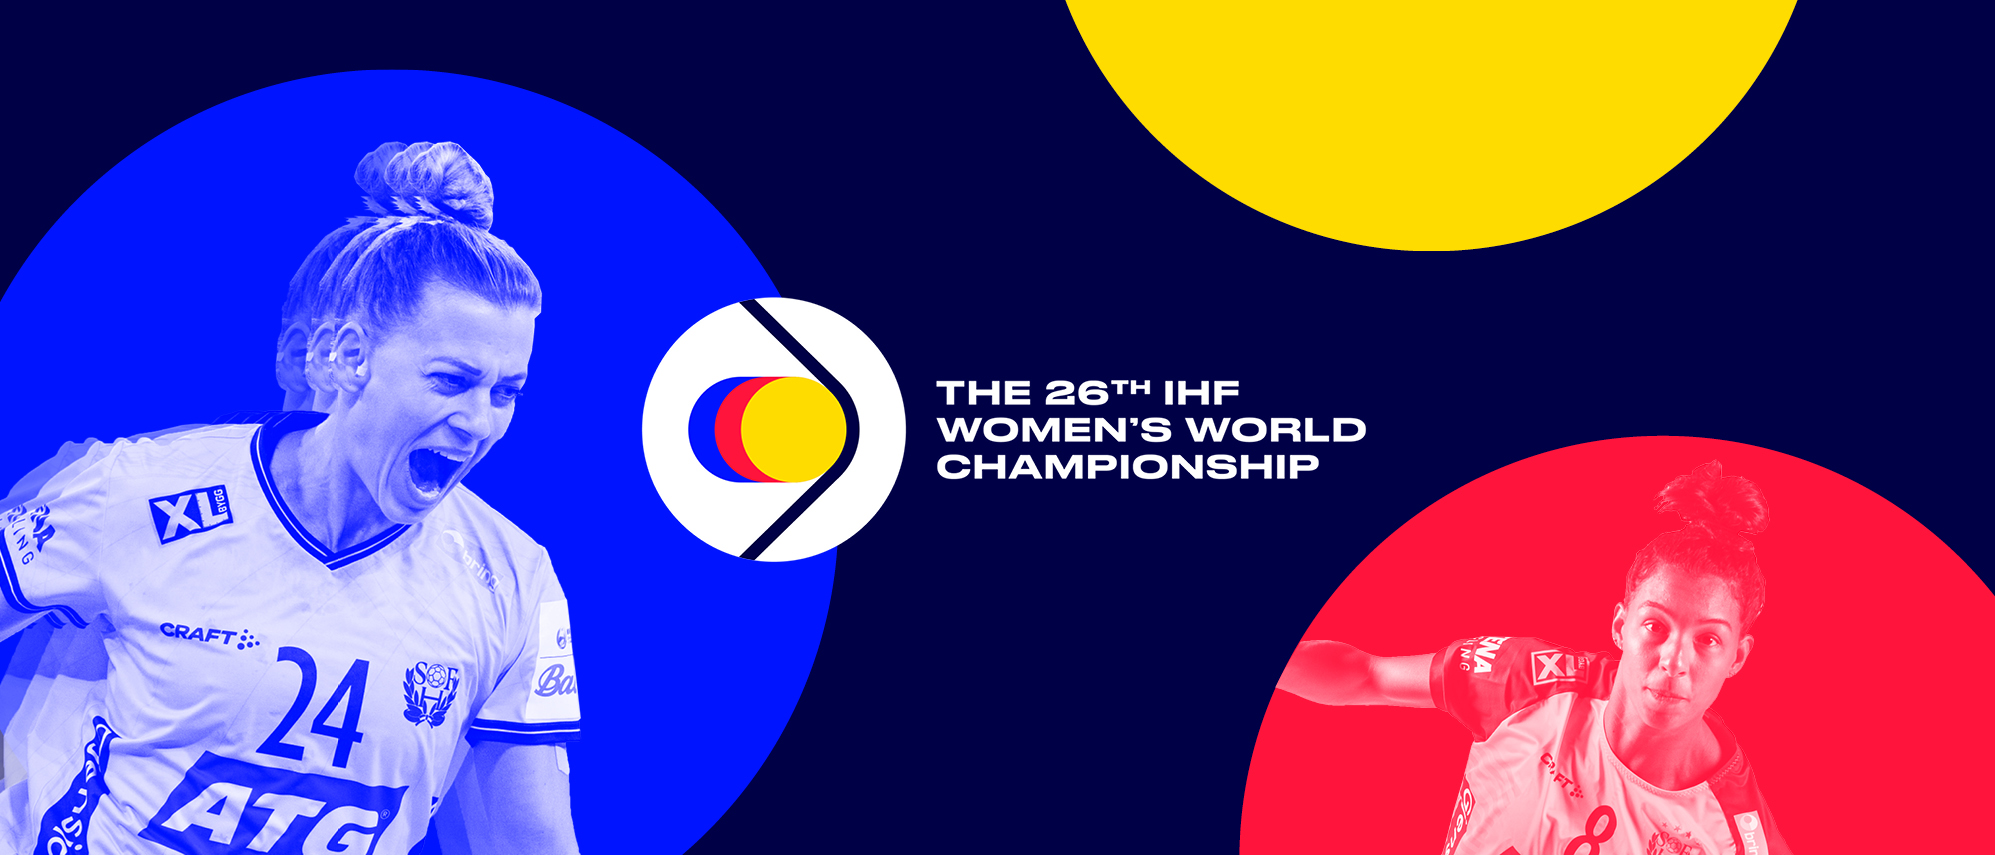 The 26th IHF Womens World Championship.